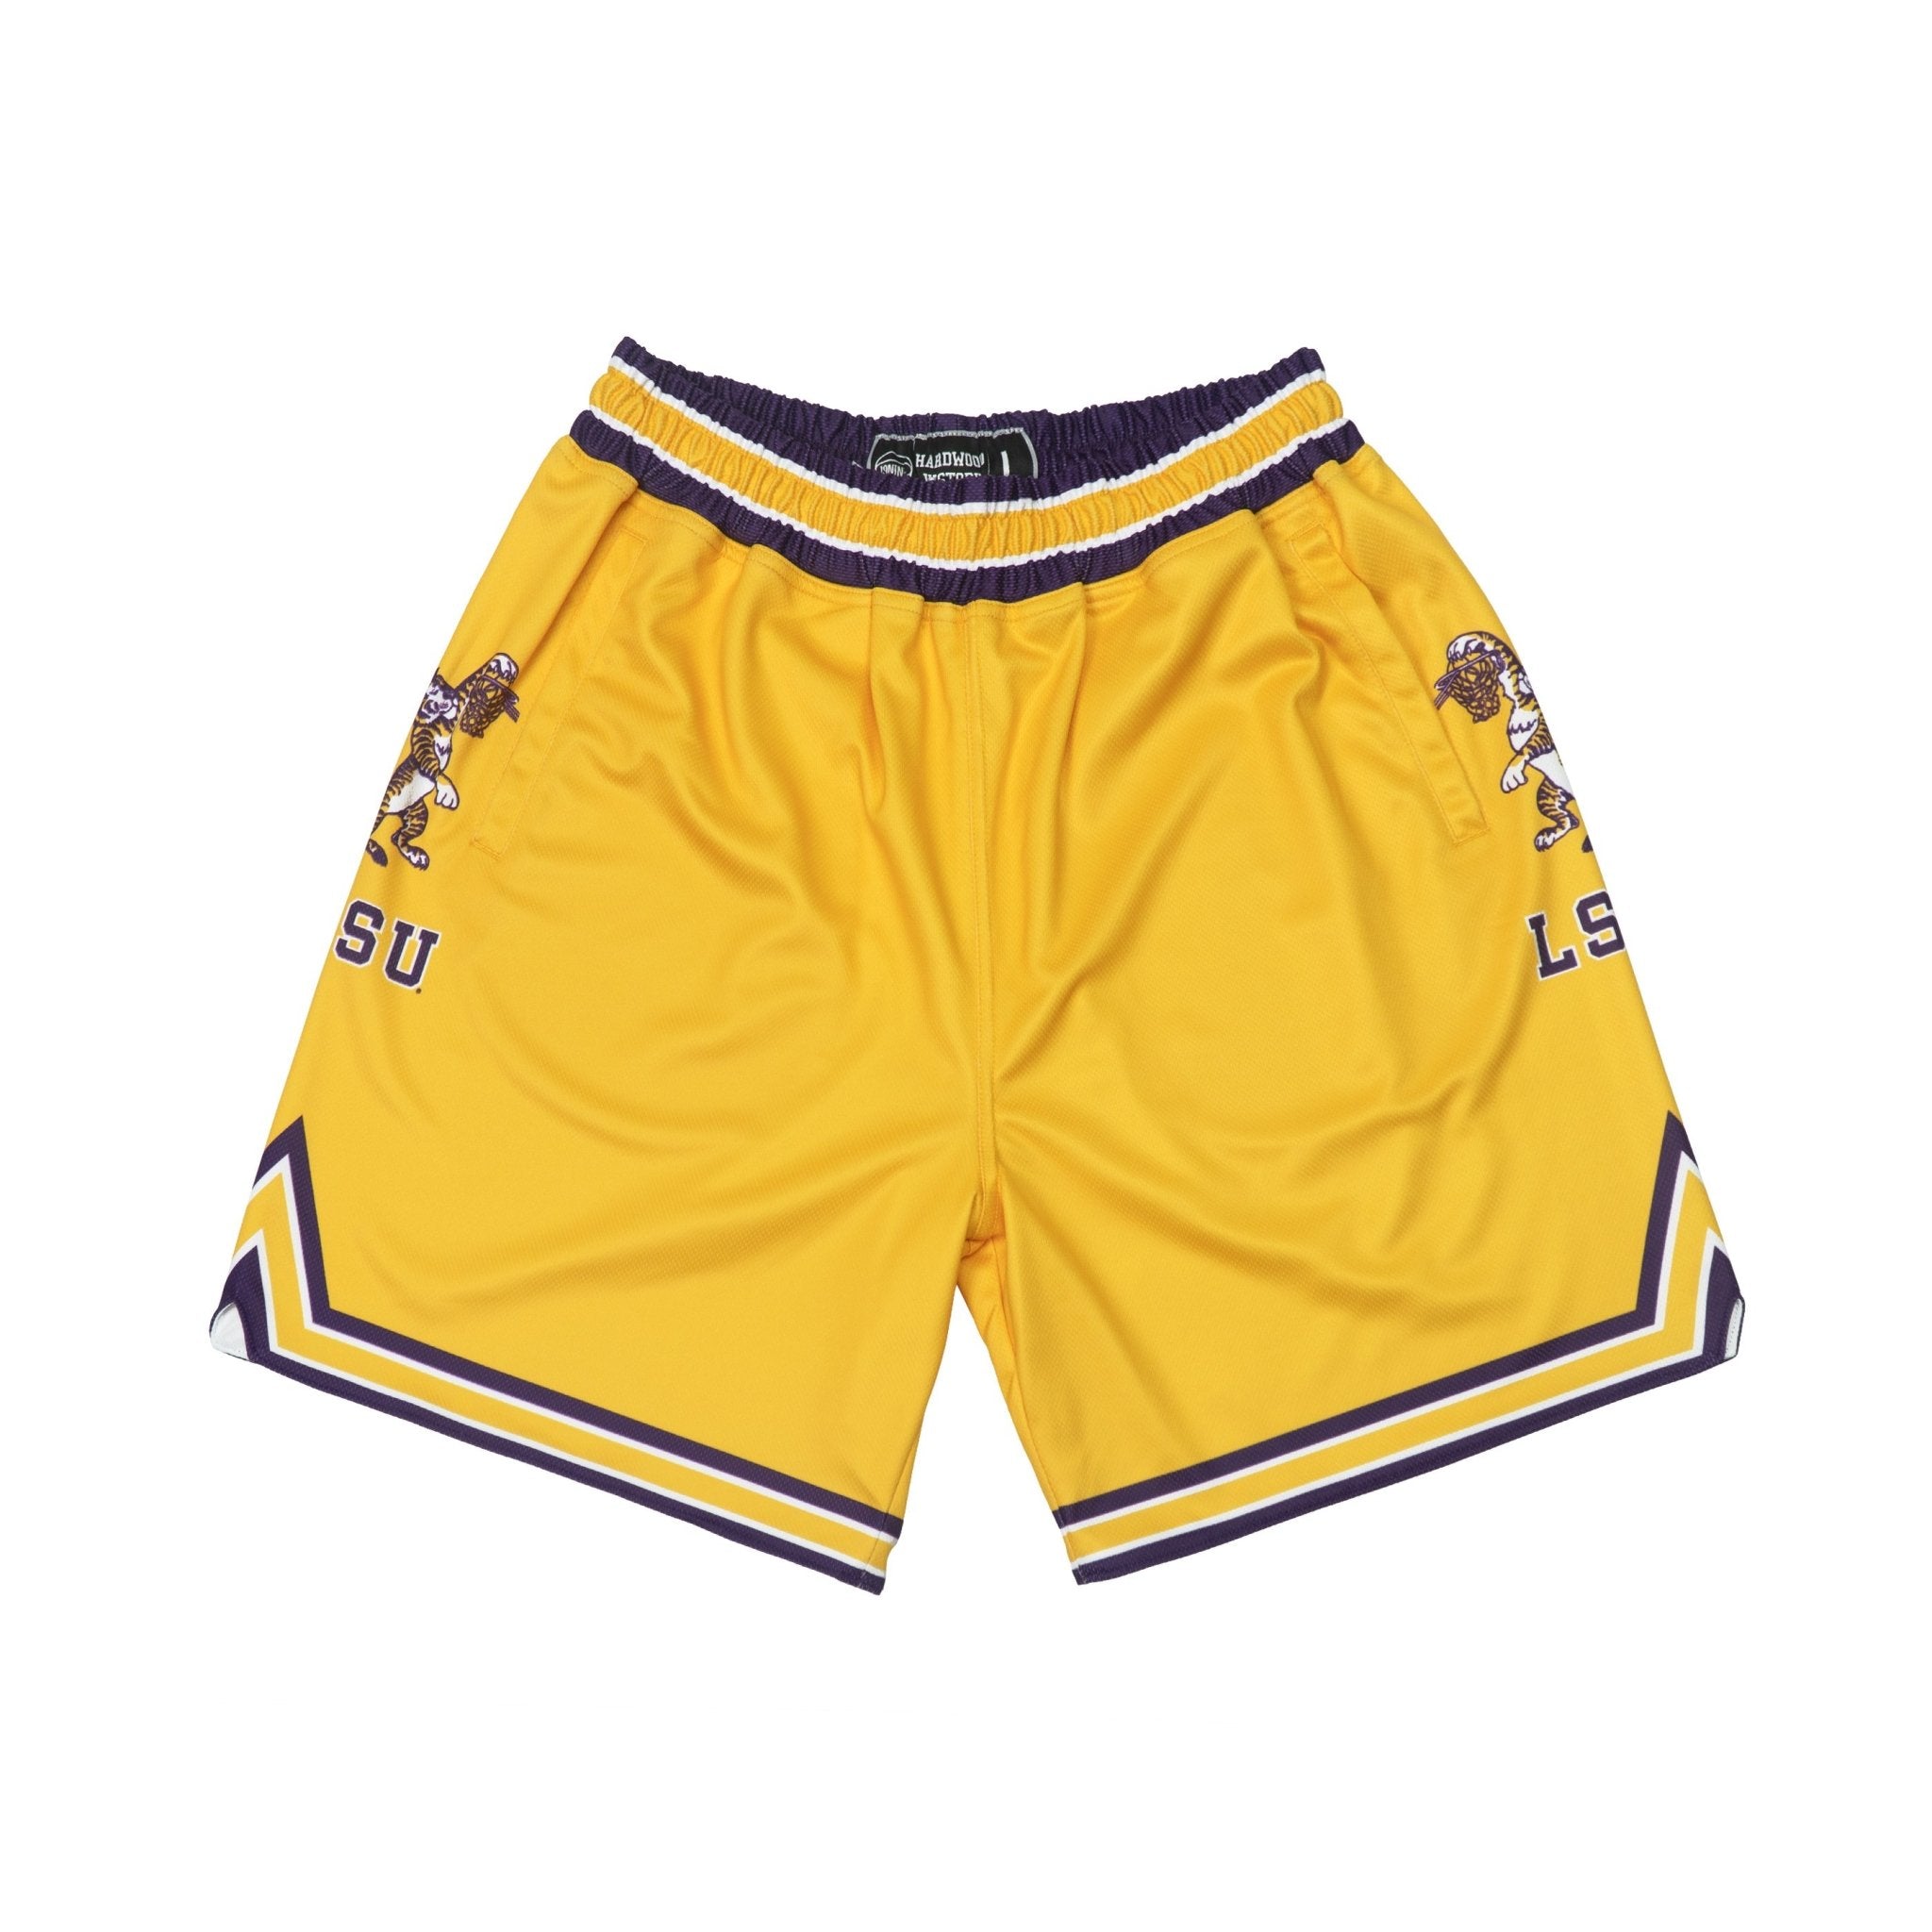 LSU Basketball on X: Short shorts, don't care 😈